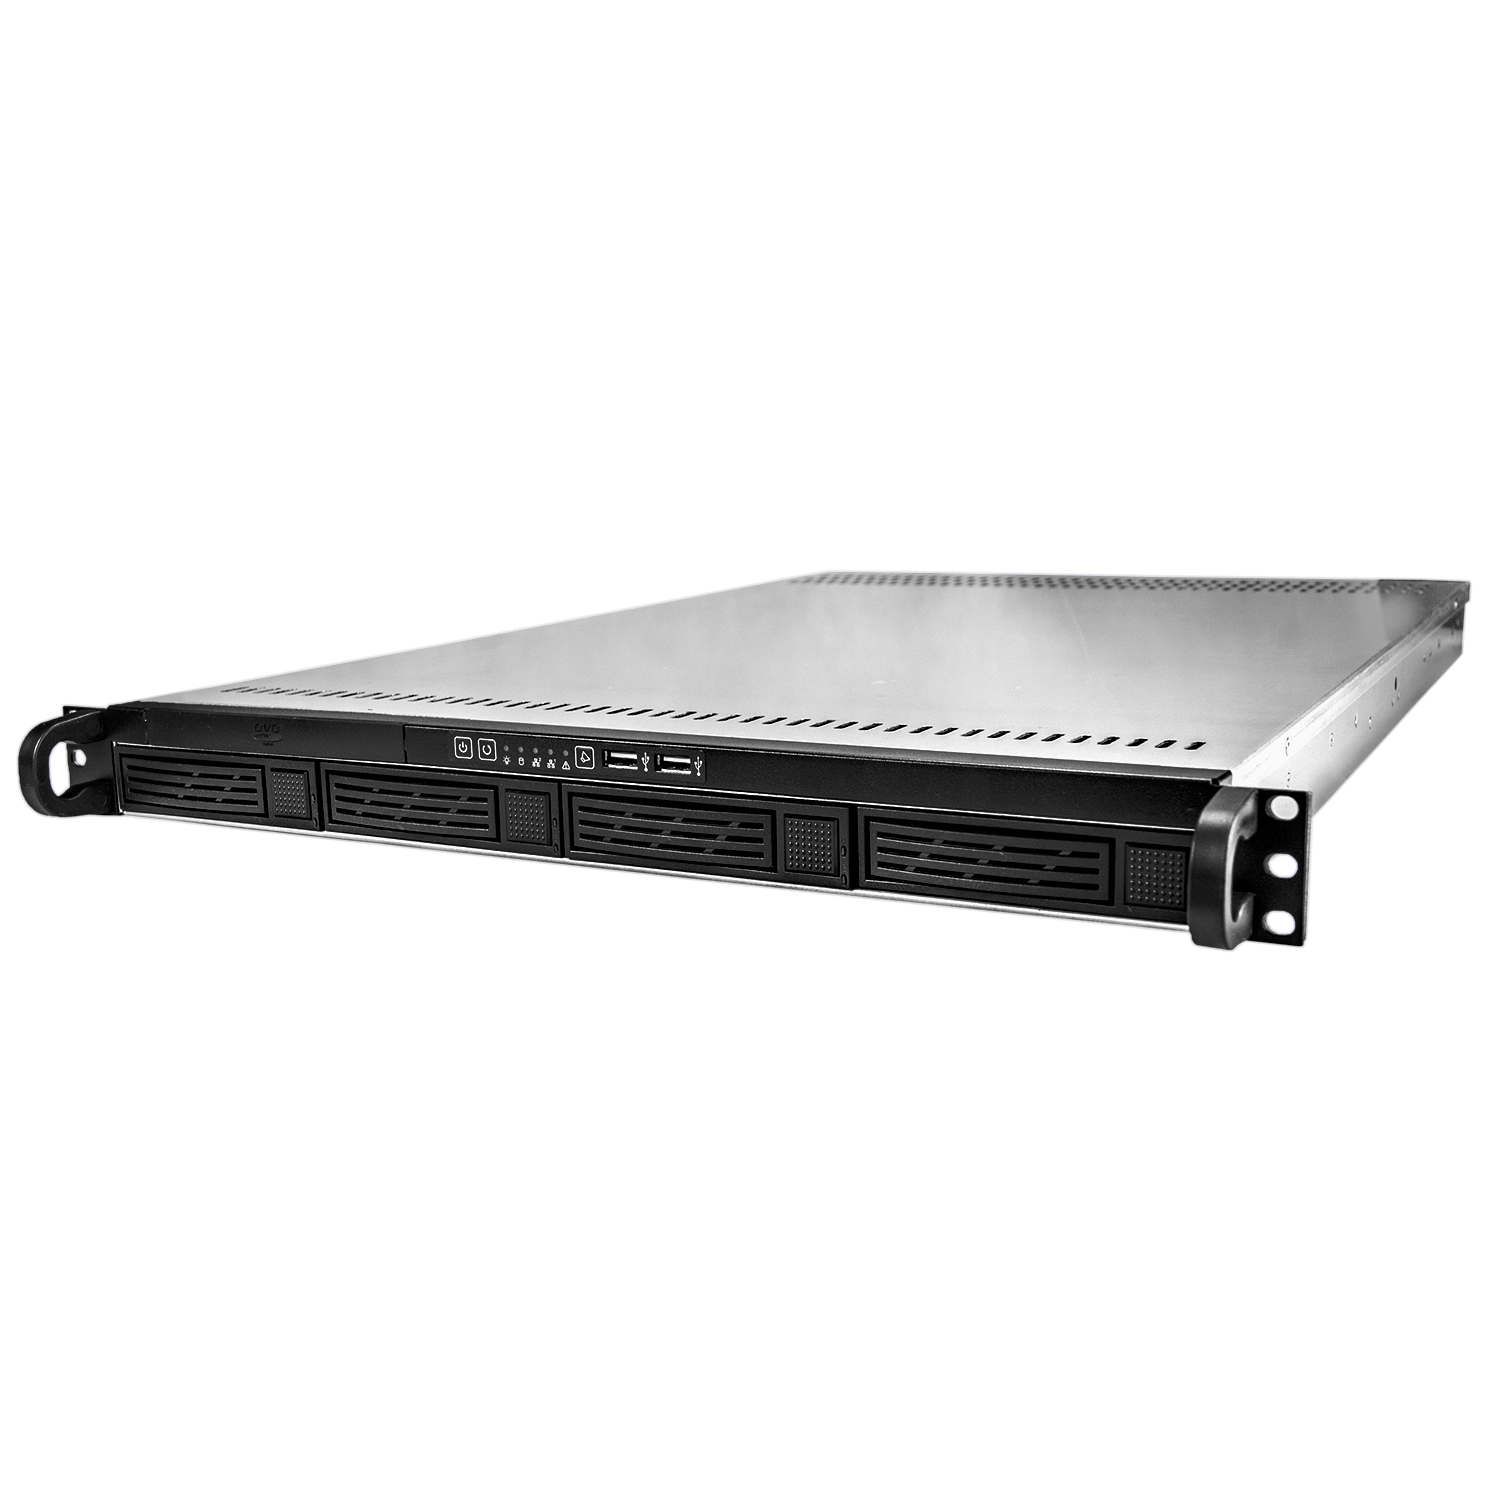 Серверный корпус 1U NR-R1004 600Вт 4xHot Swap SAS/SATA (ATX 10"x12", 2x2.5" int, Slim CD, 550mm)